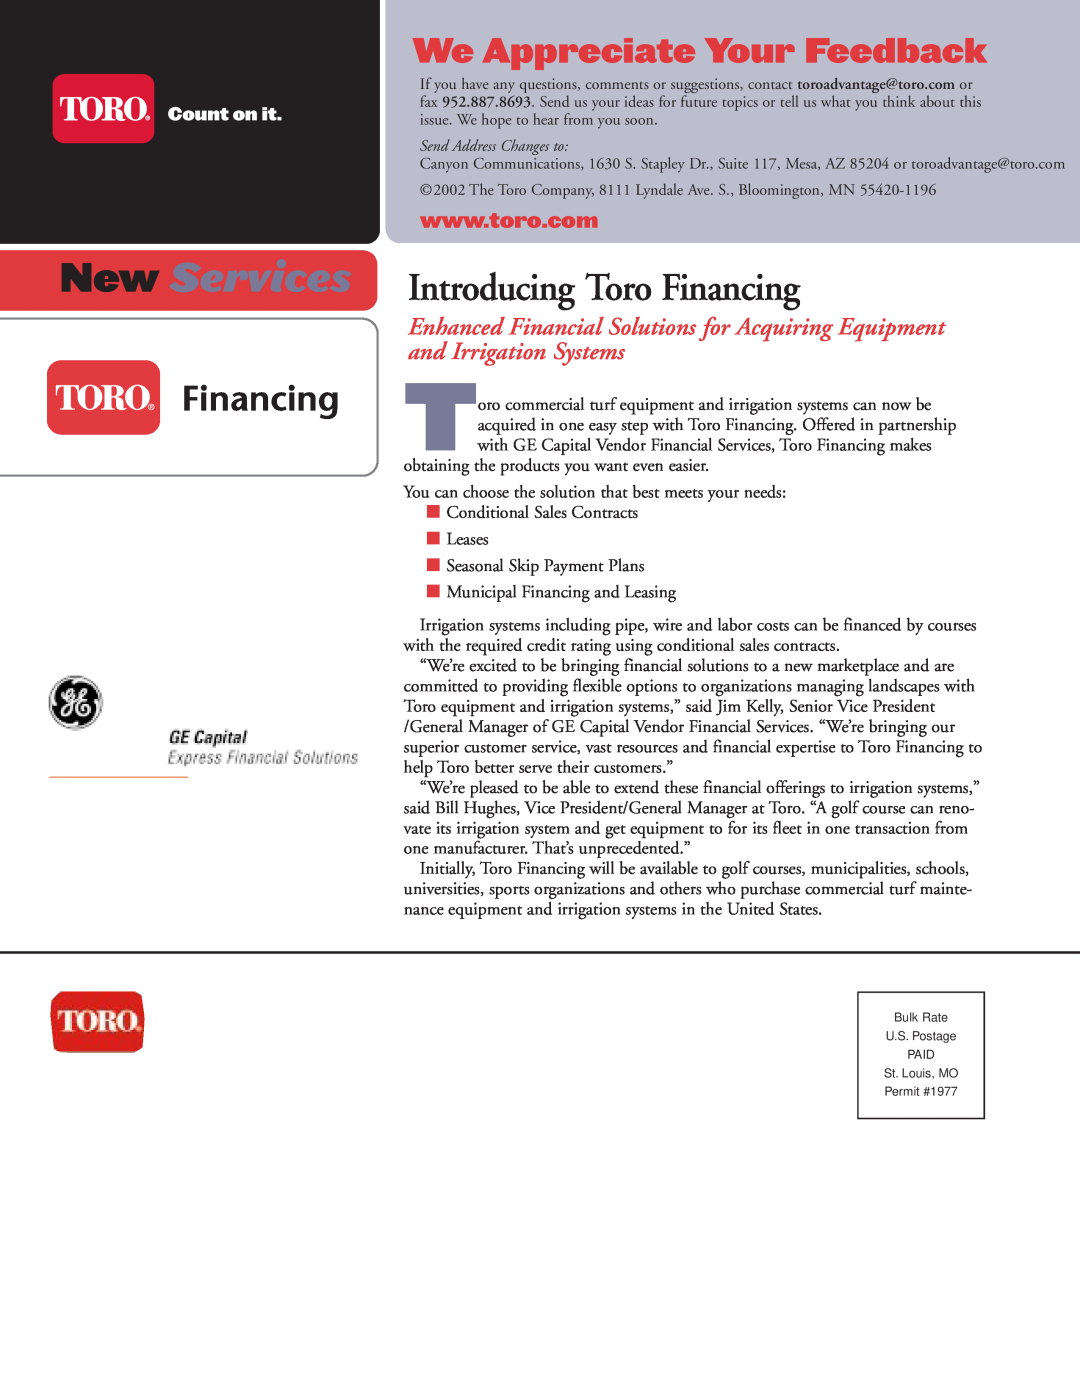 Toro 4500-D manual New Services, Introducing Toro Financing, We Appreciate Your Feedback 